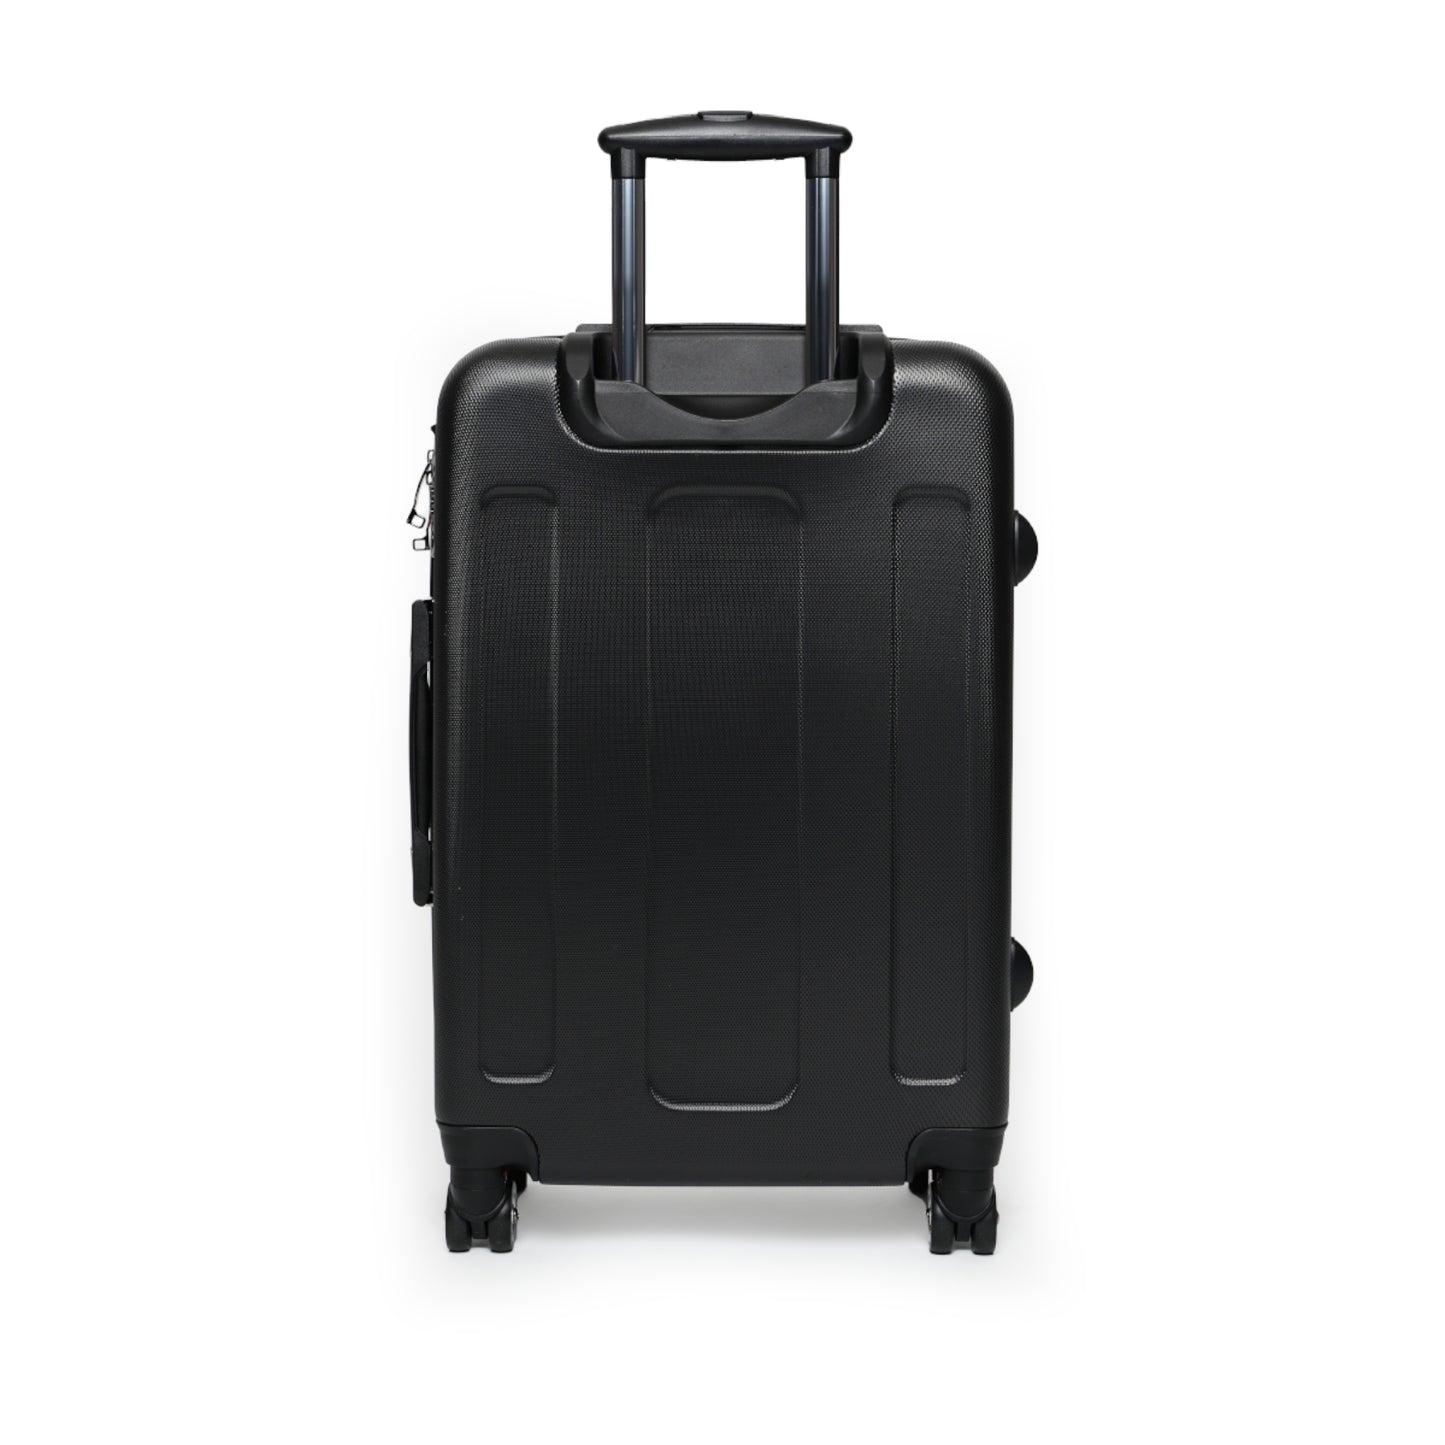 DH FLIGHT Luggage in MARSH (Small, Medium & Large)